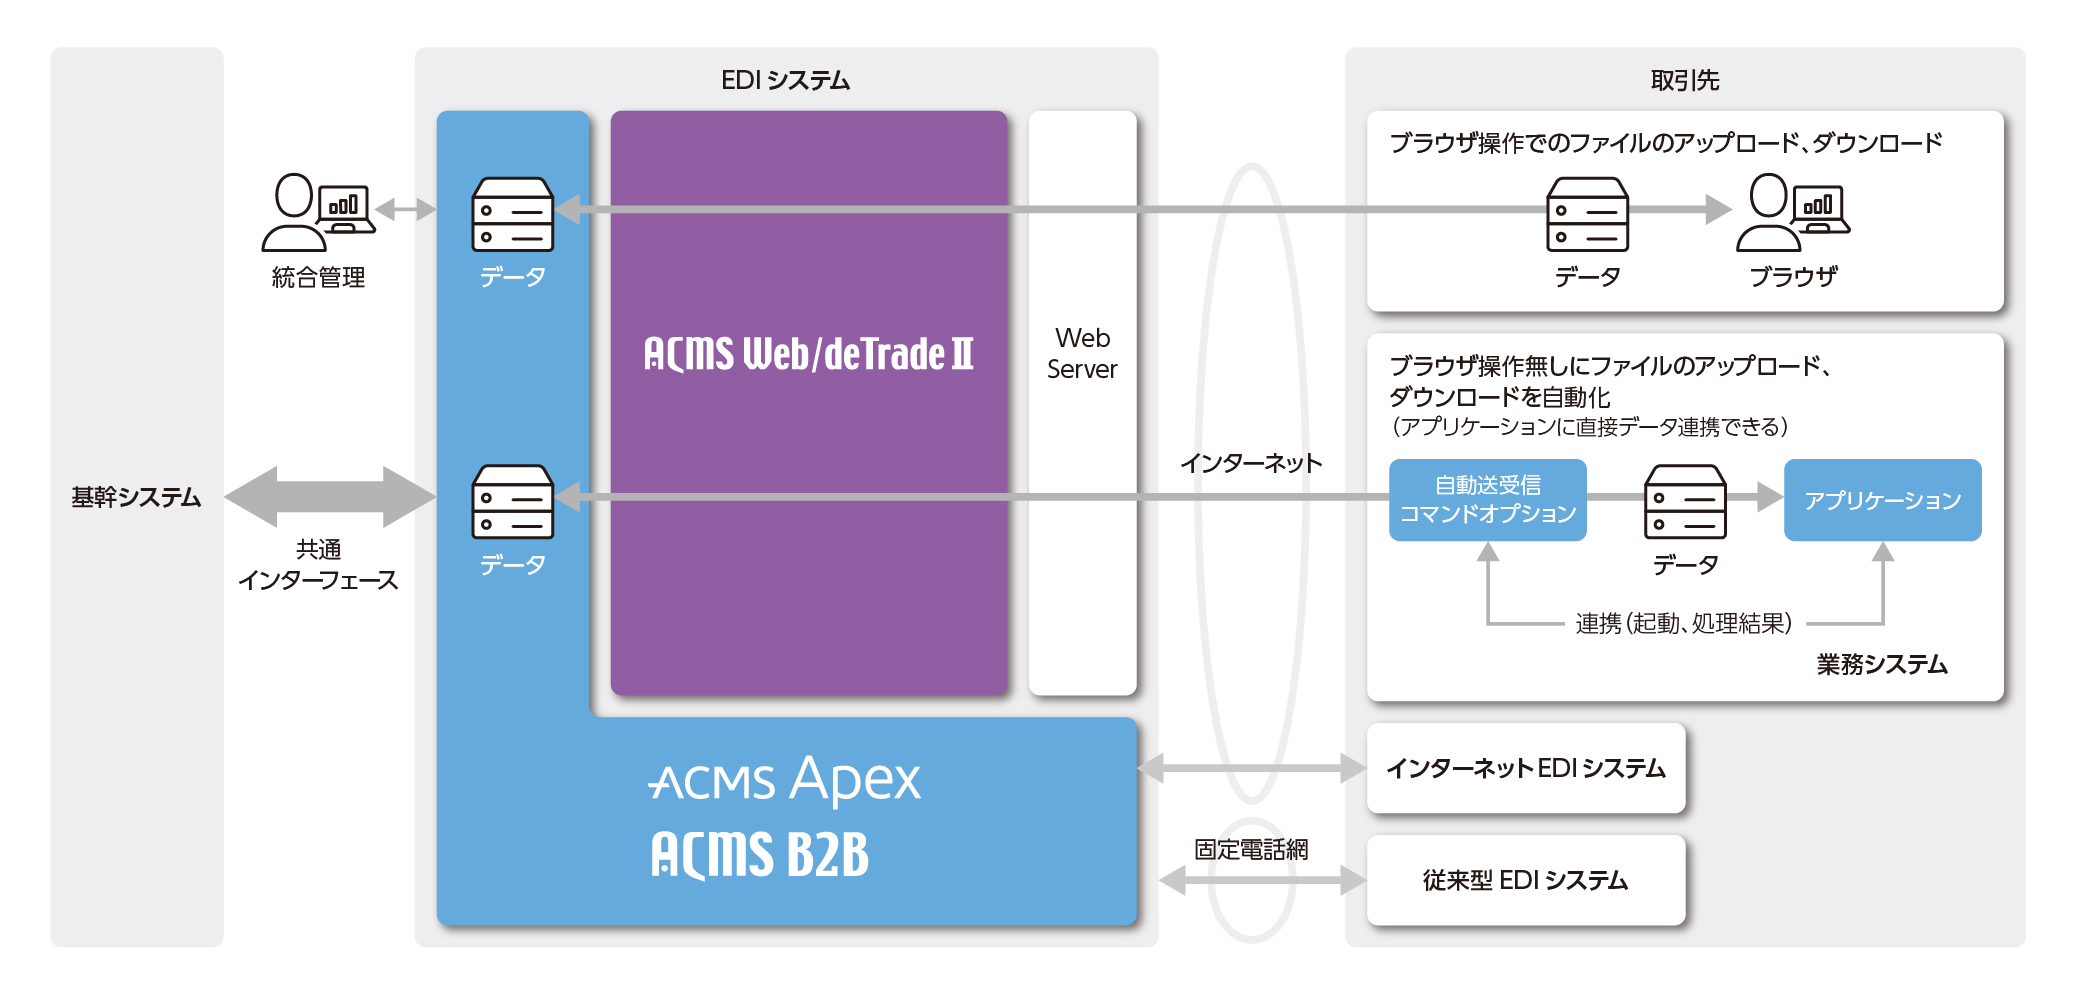 ACMS Web/deTrade II：概要